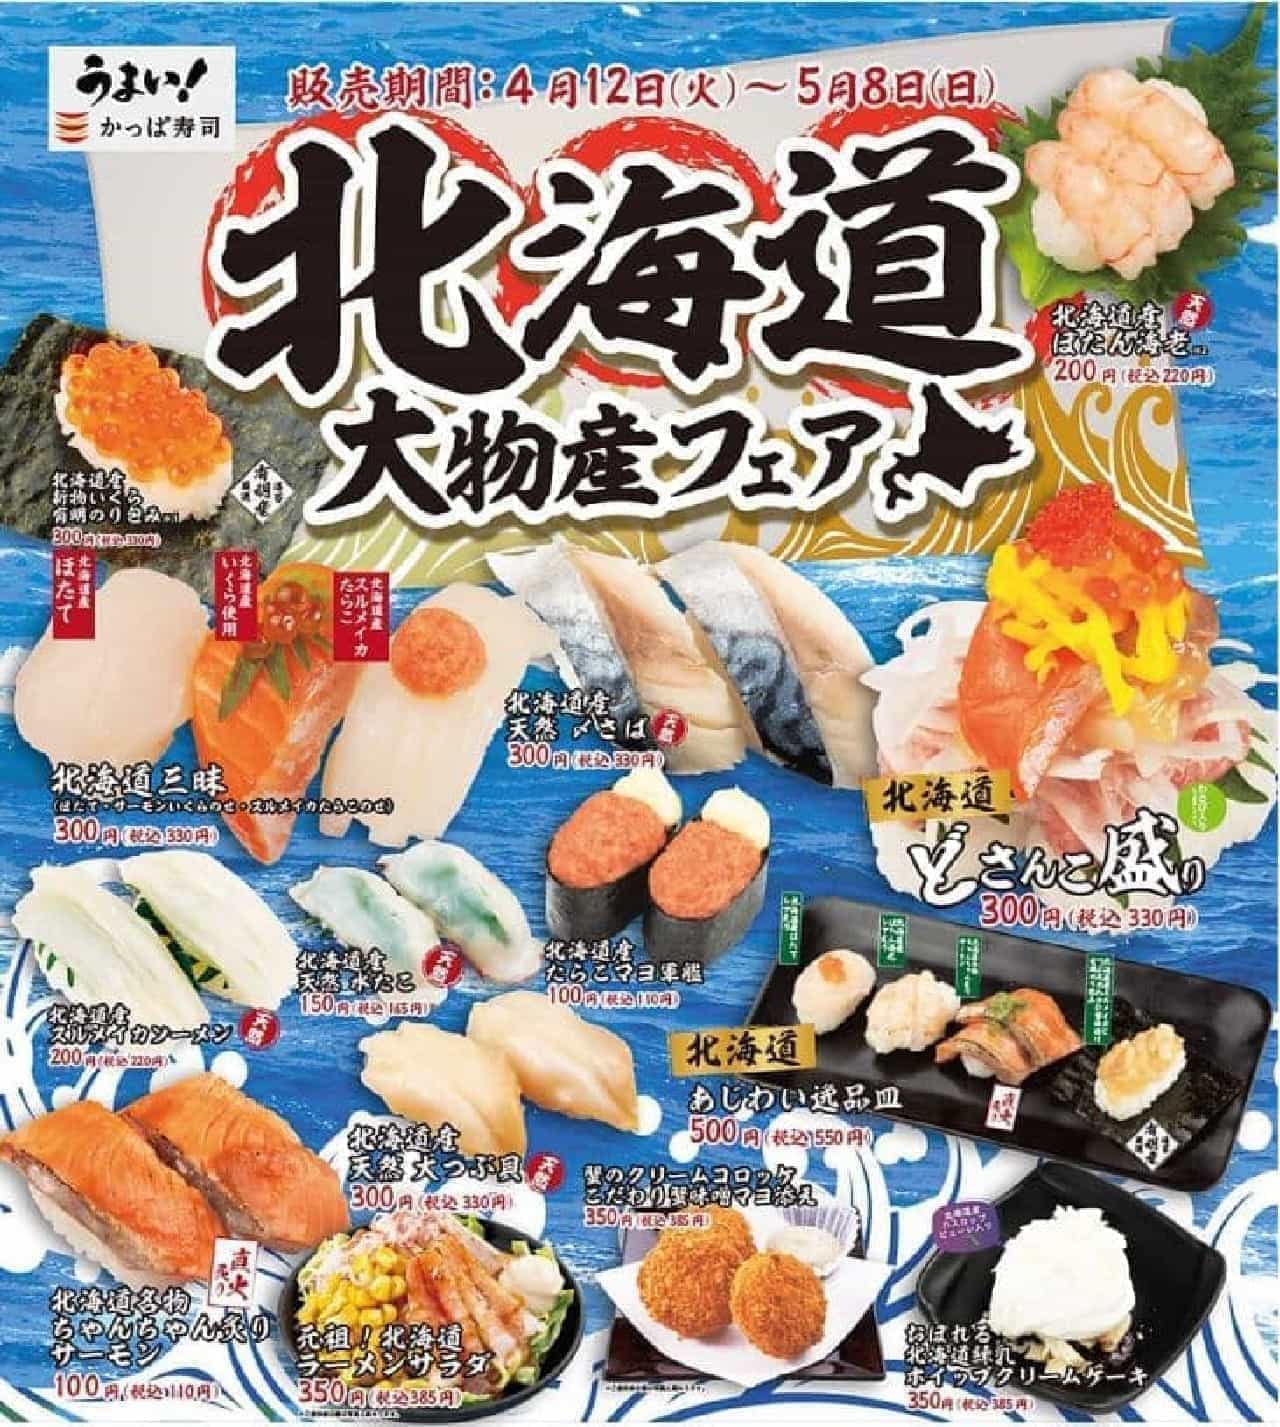 Kappa Sushi "Hokkaido Dai Bussan Fair